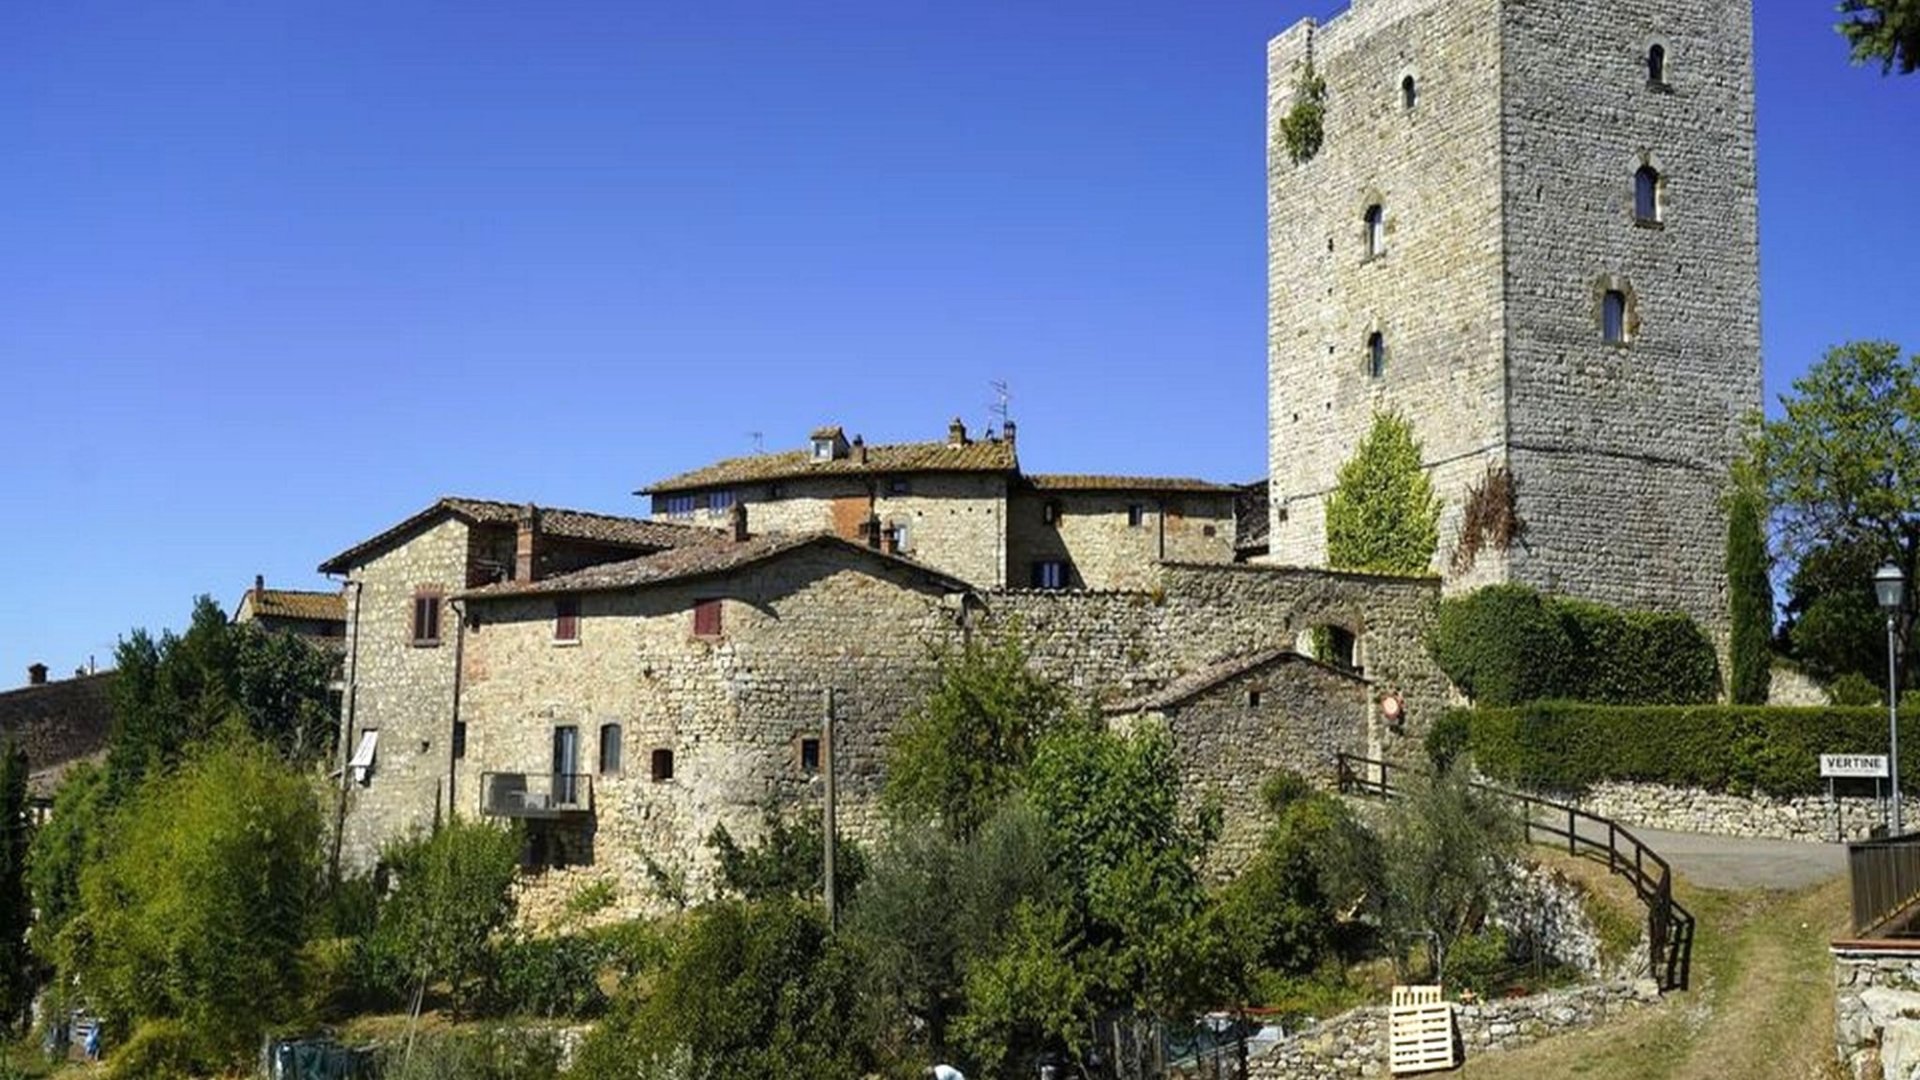 Chianti castles: the ring of Vertine